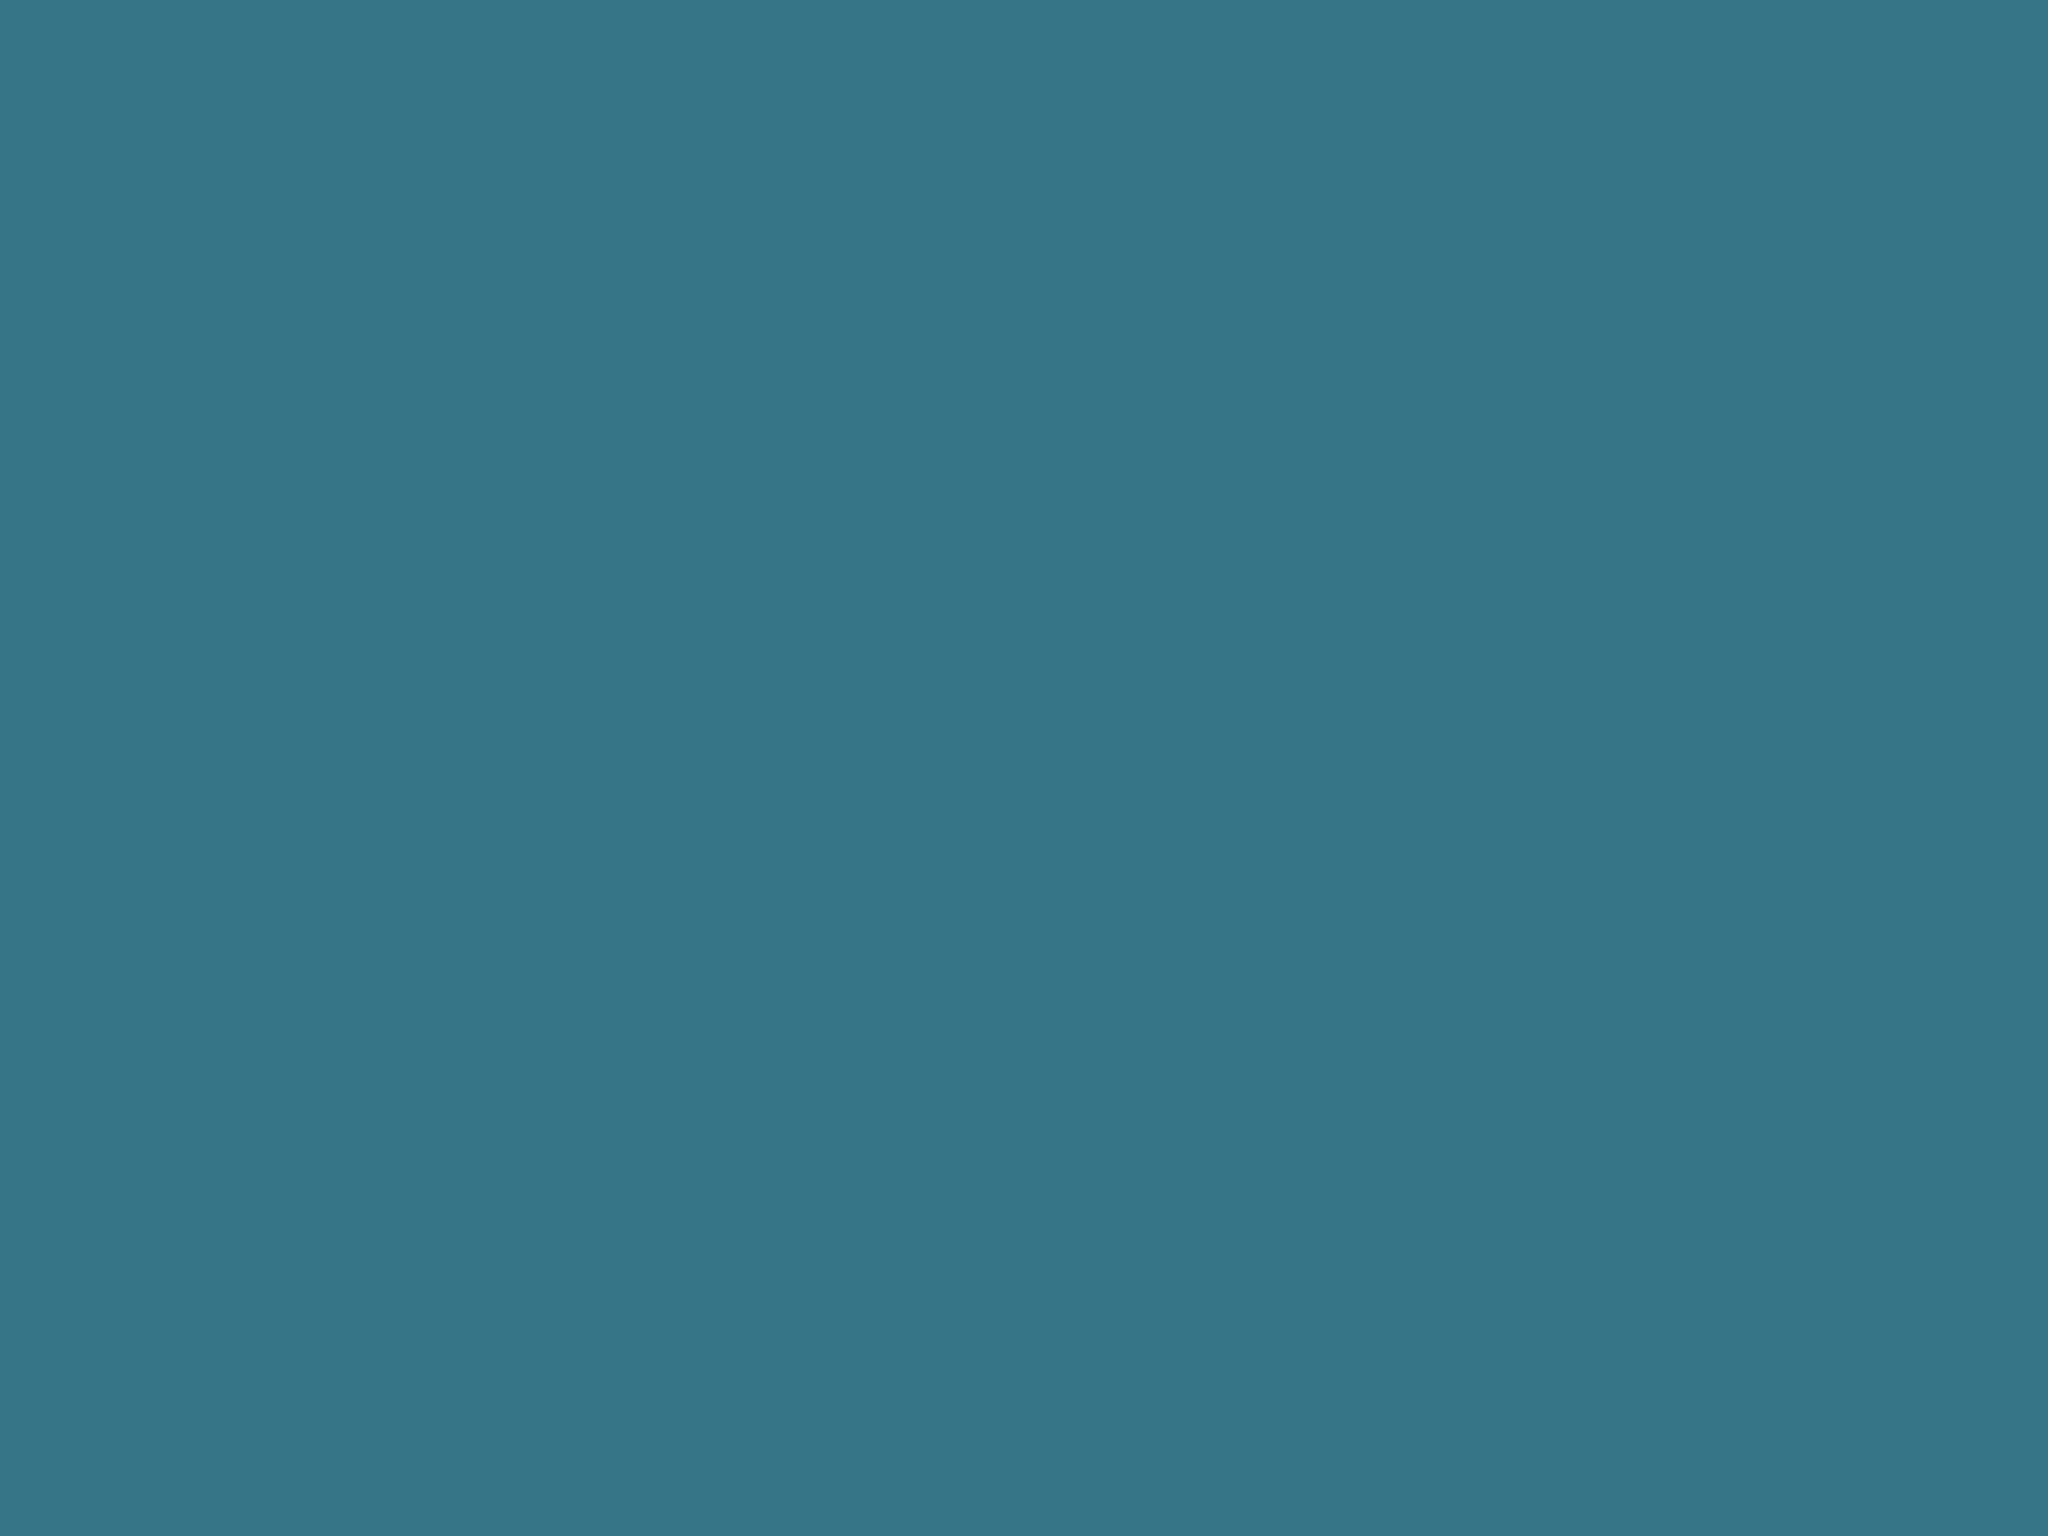 2048x1536 Teal Blue Solid Color Background